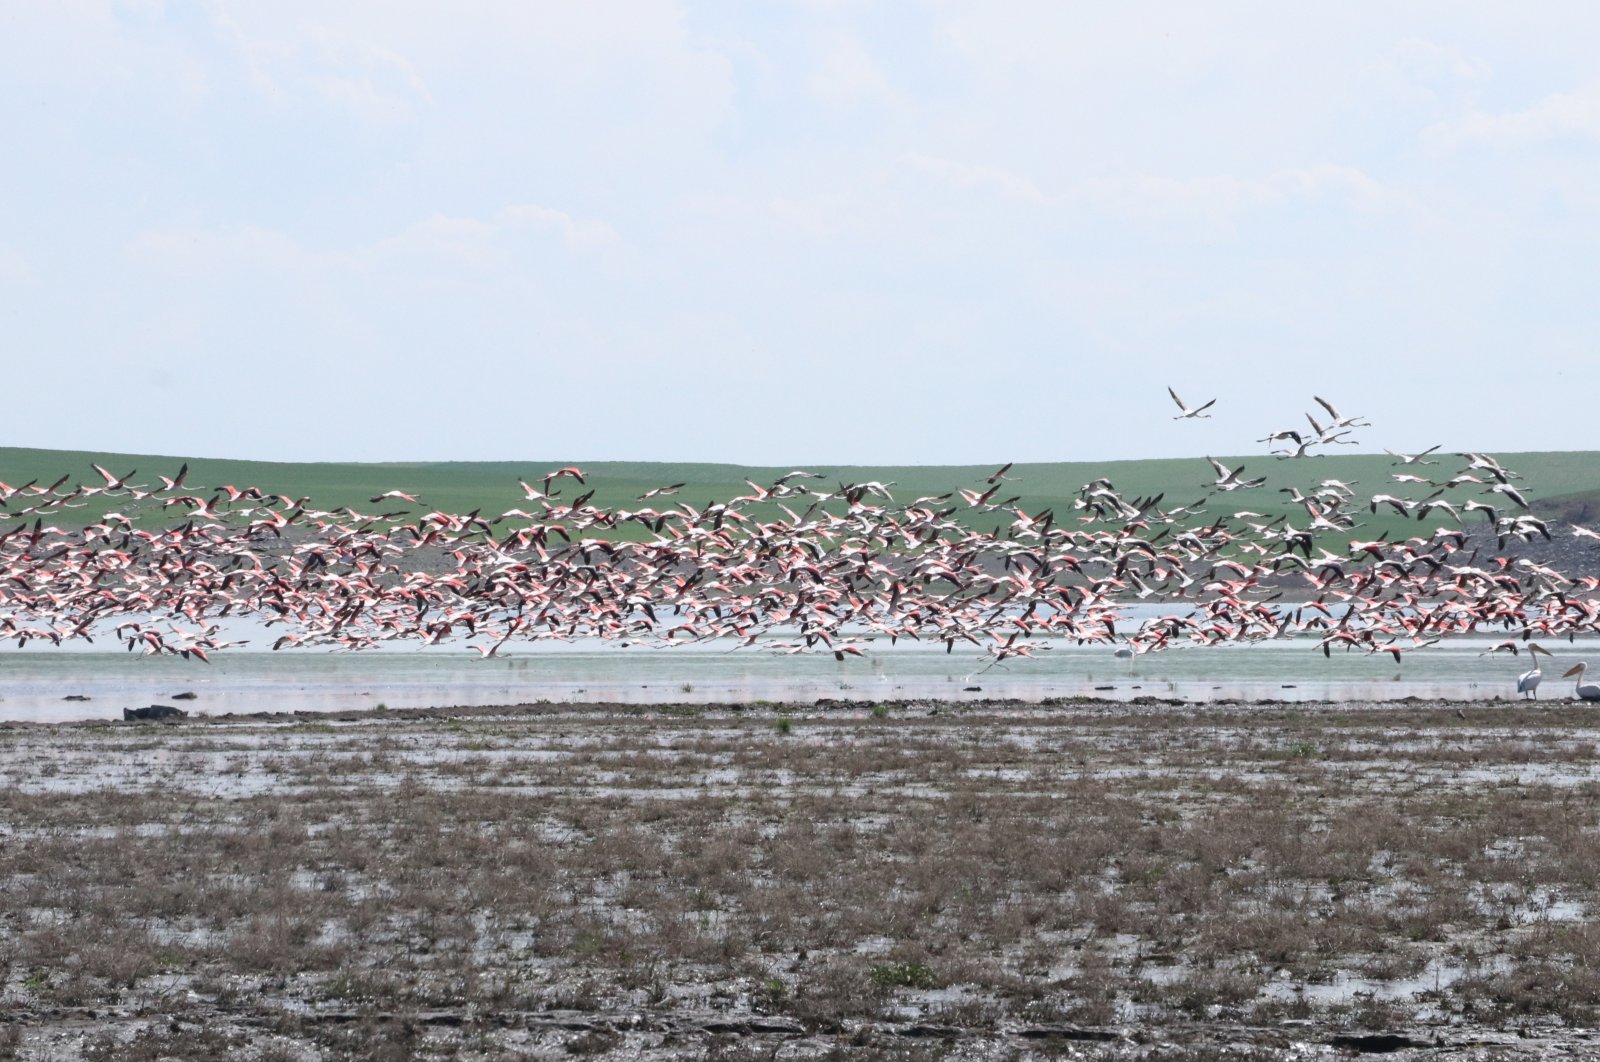 Habitat lahan basah Türkiye menyambut kawanan flamingo pertama